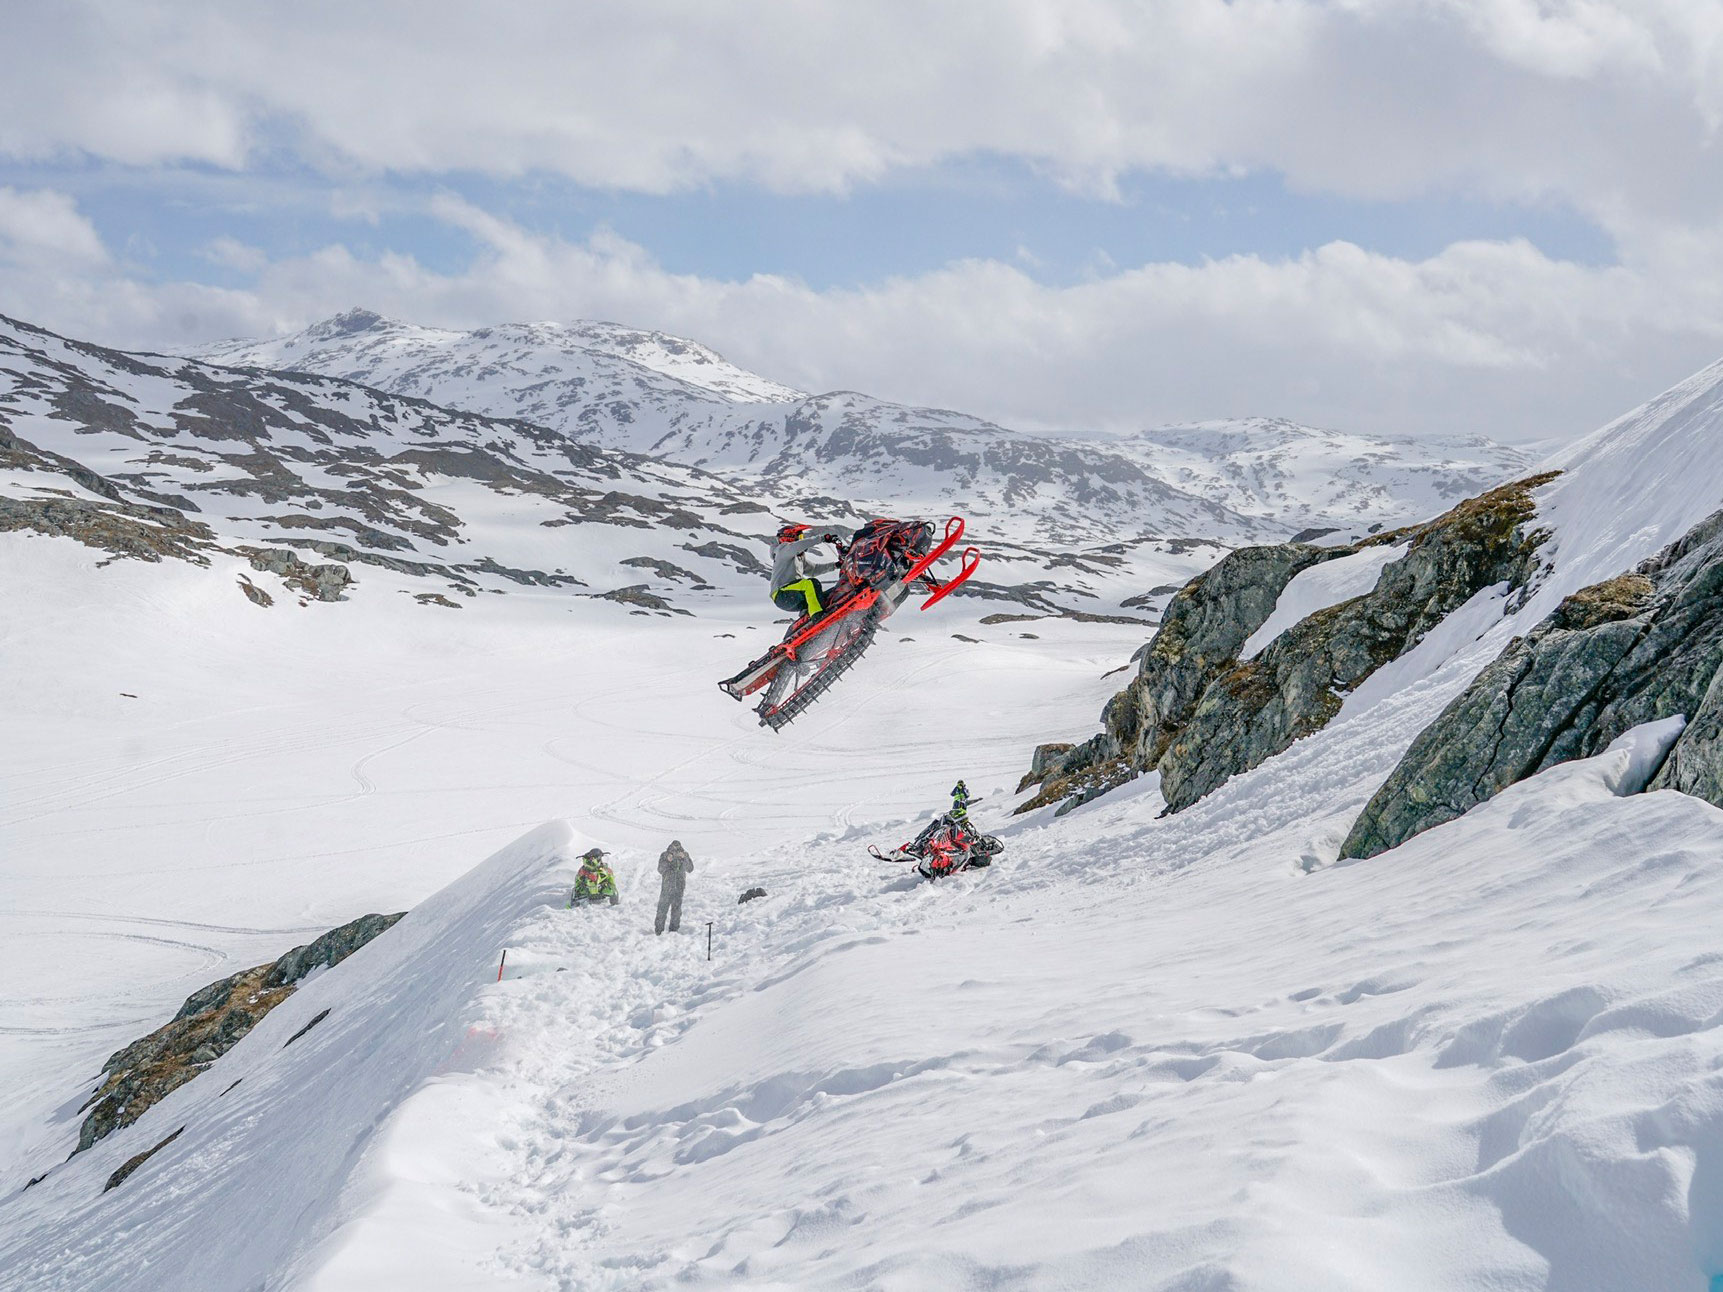 Aki Hautaniemi jumping with his Ski-Doo